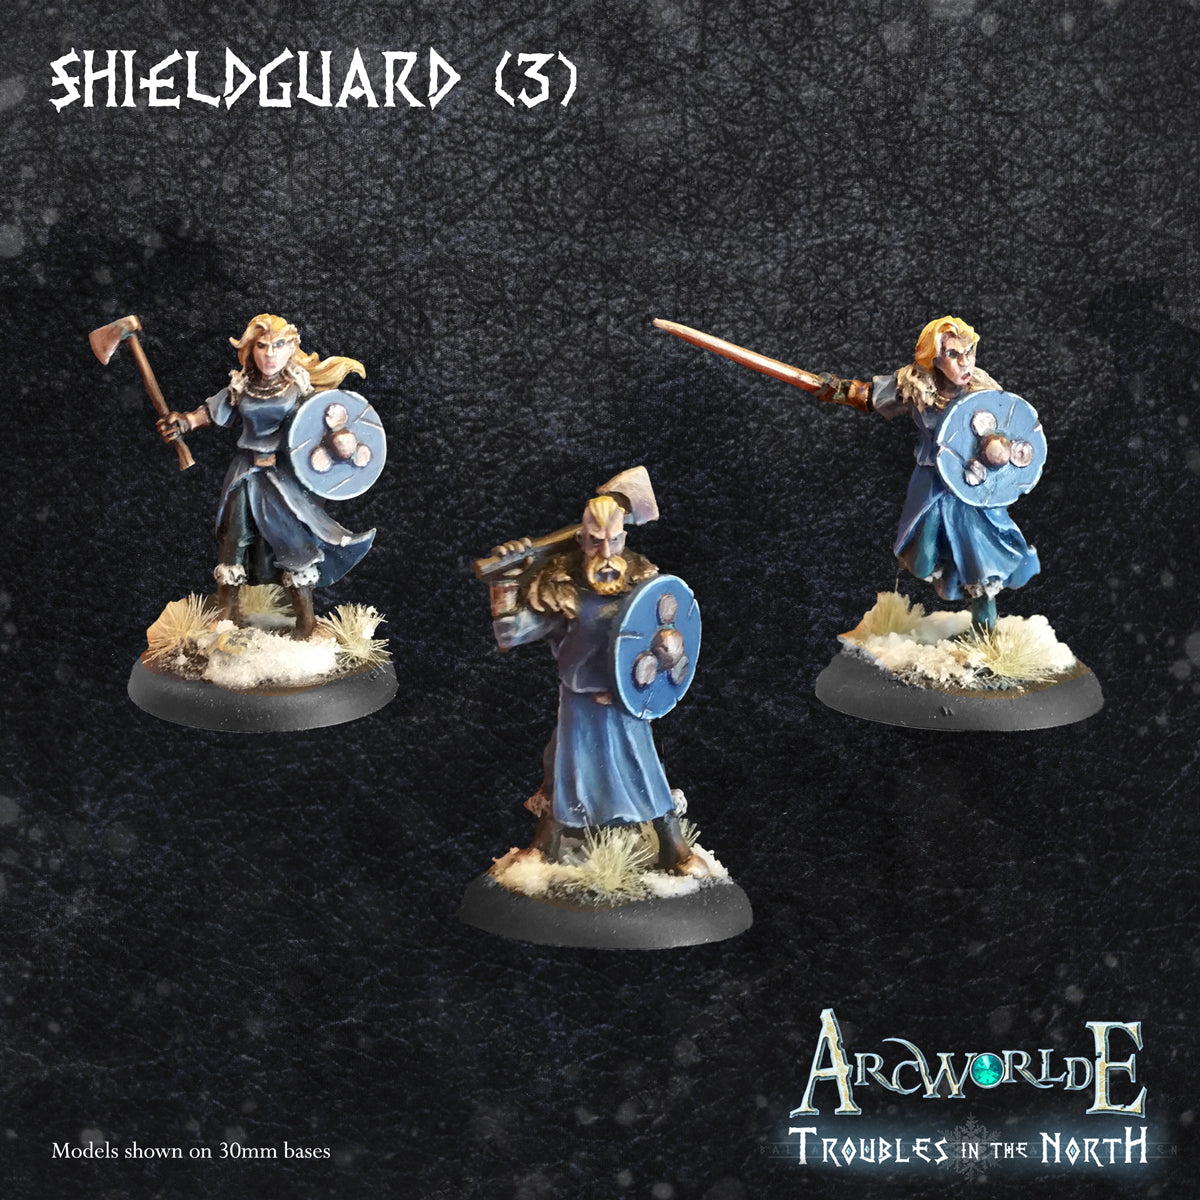 Shieldguard (3)